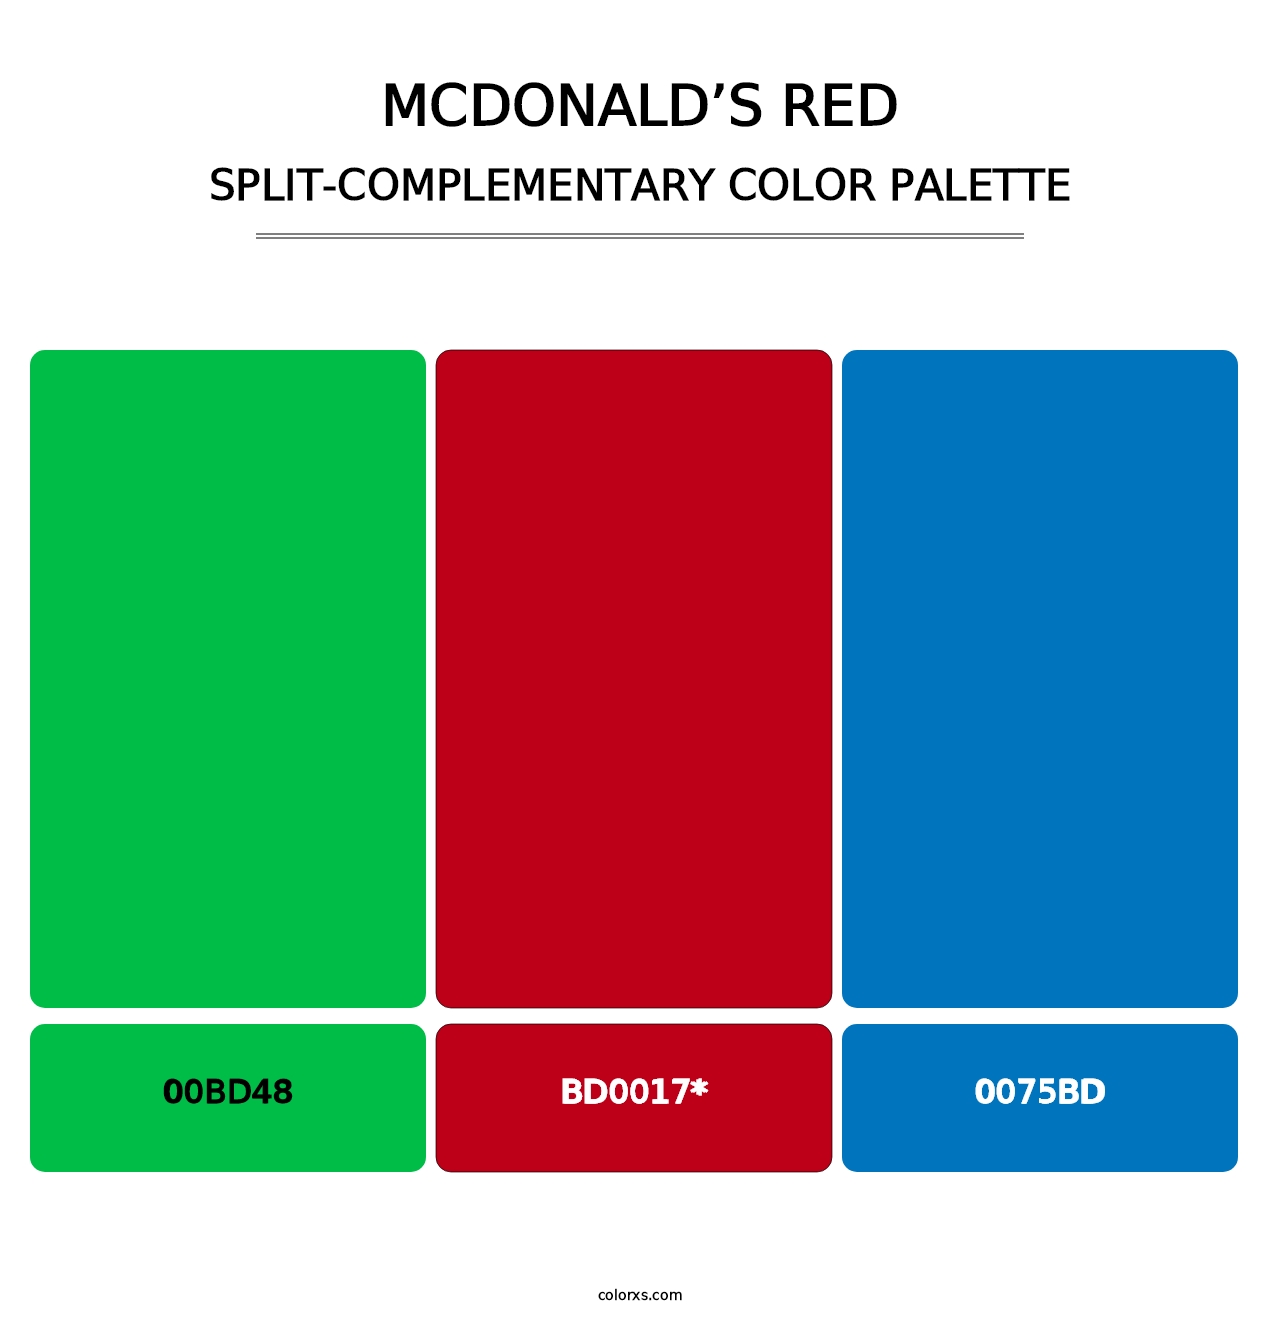 McDonald’s Red - Split-Complementary Color Palette